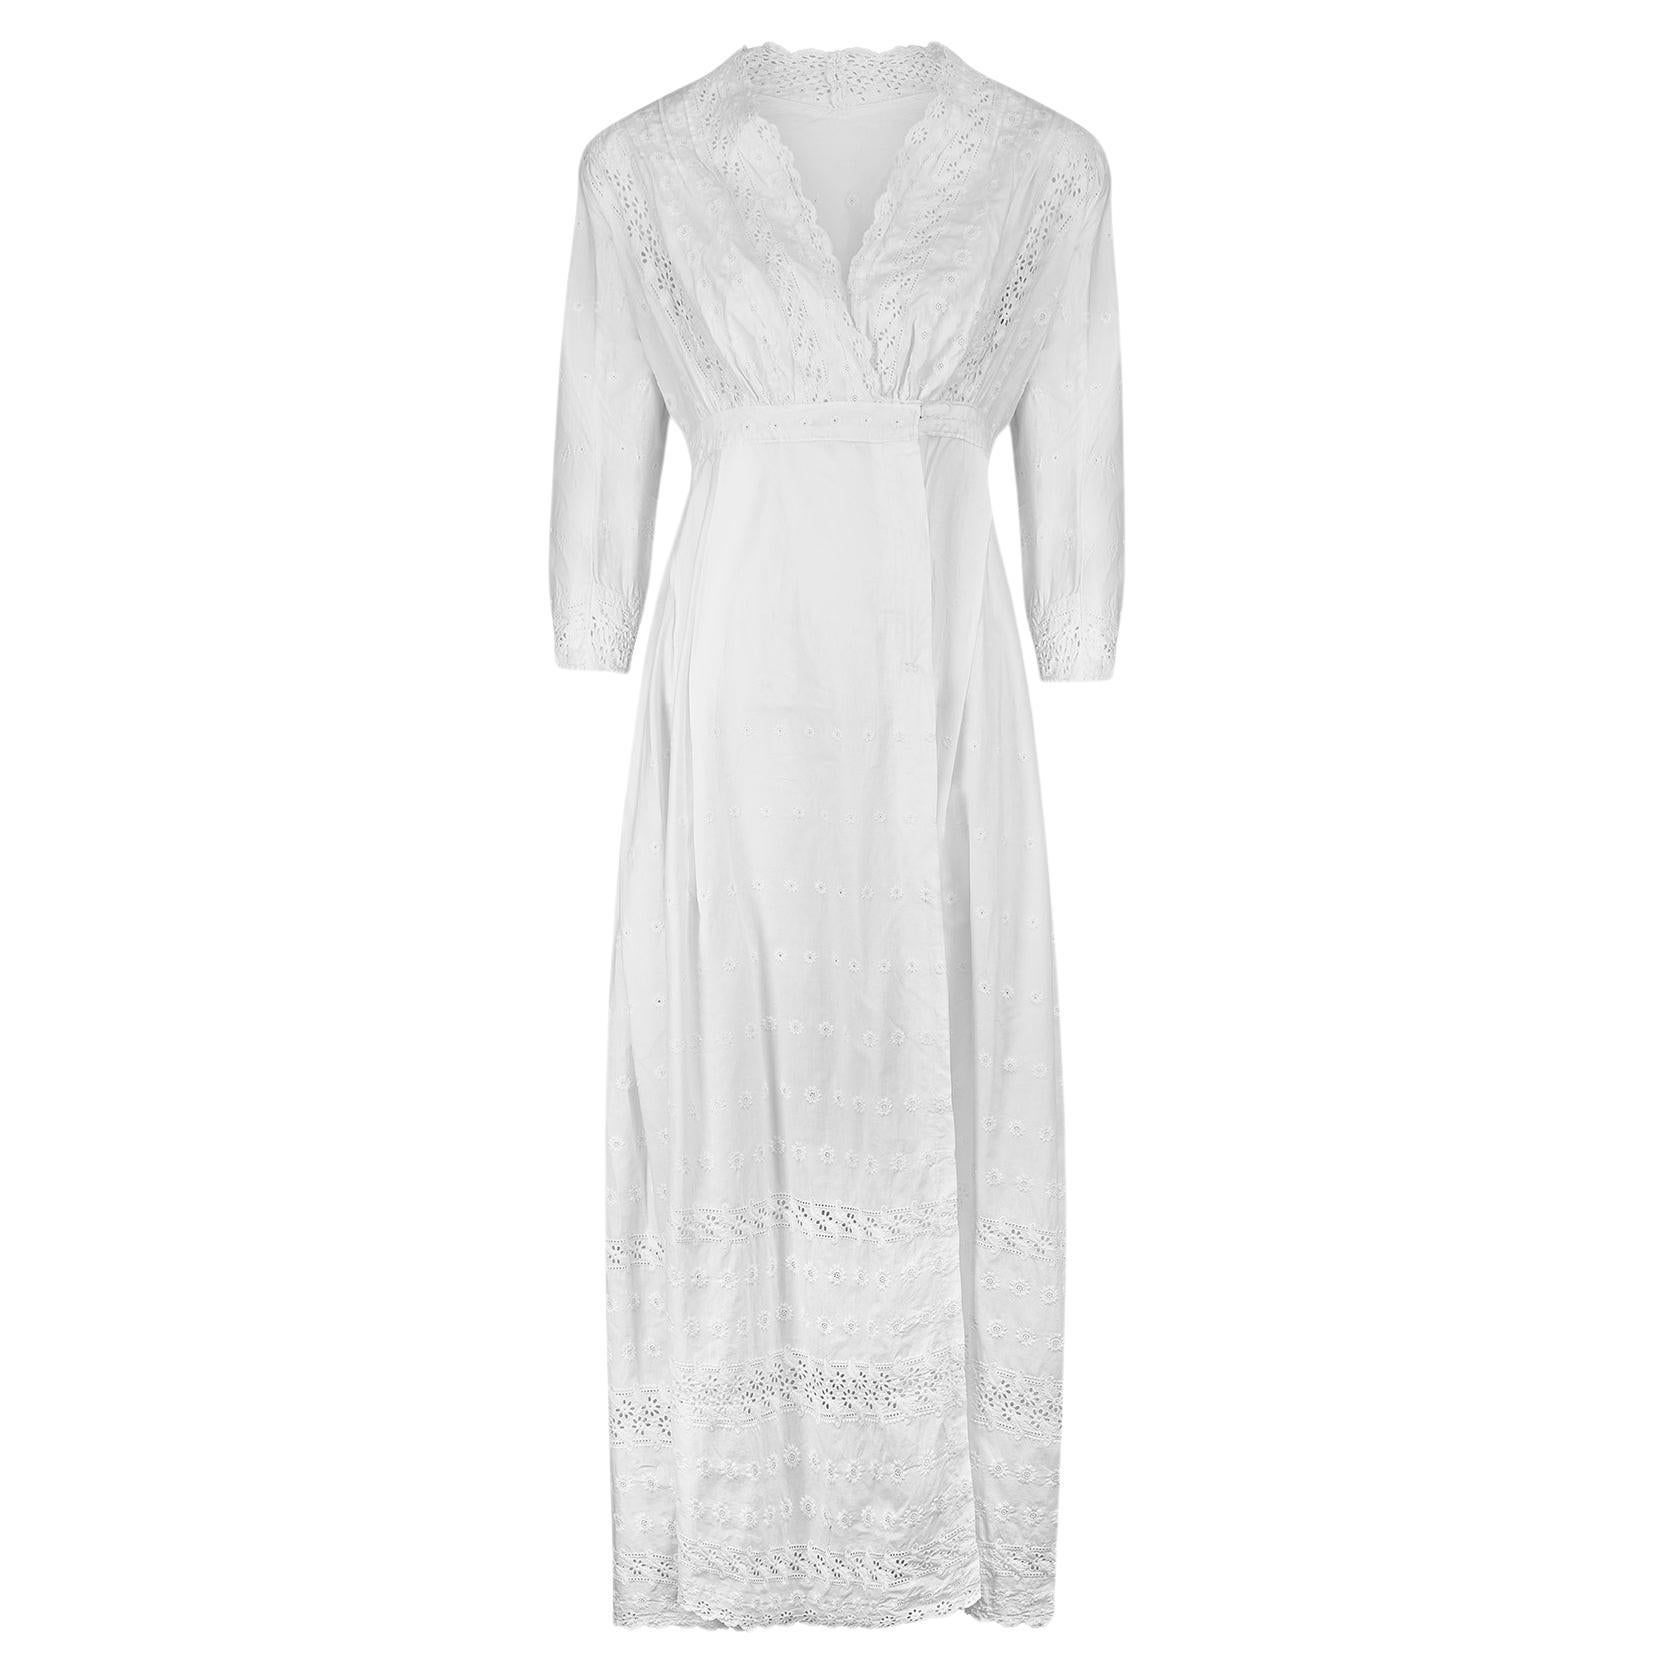 1910s Edwardian White Eyelet Work Wrap Dress For Sale